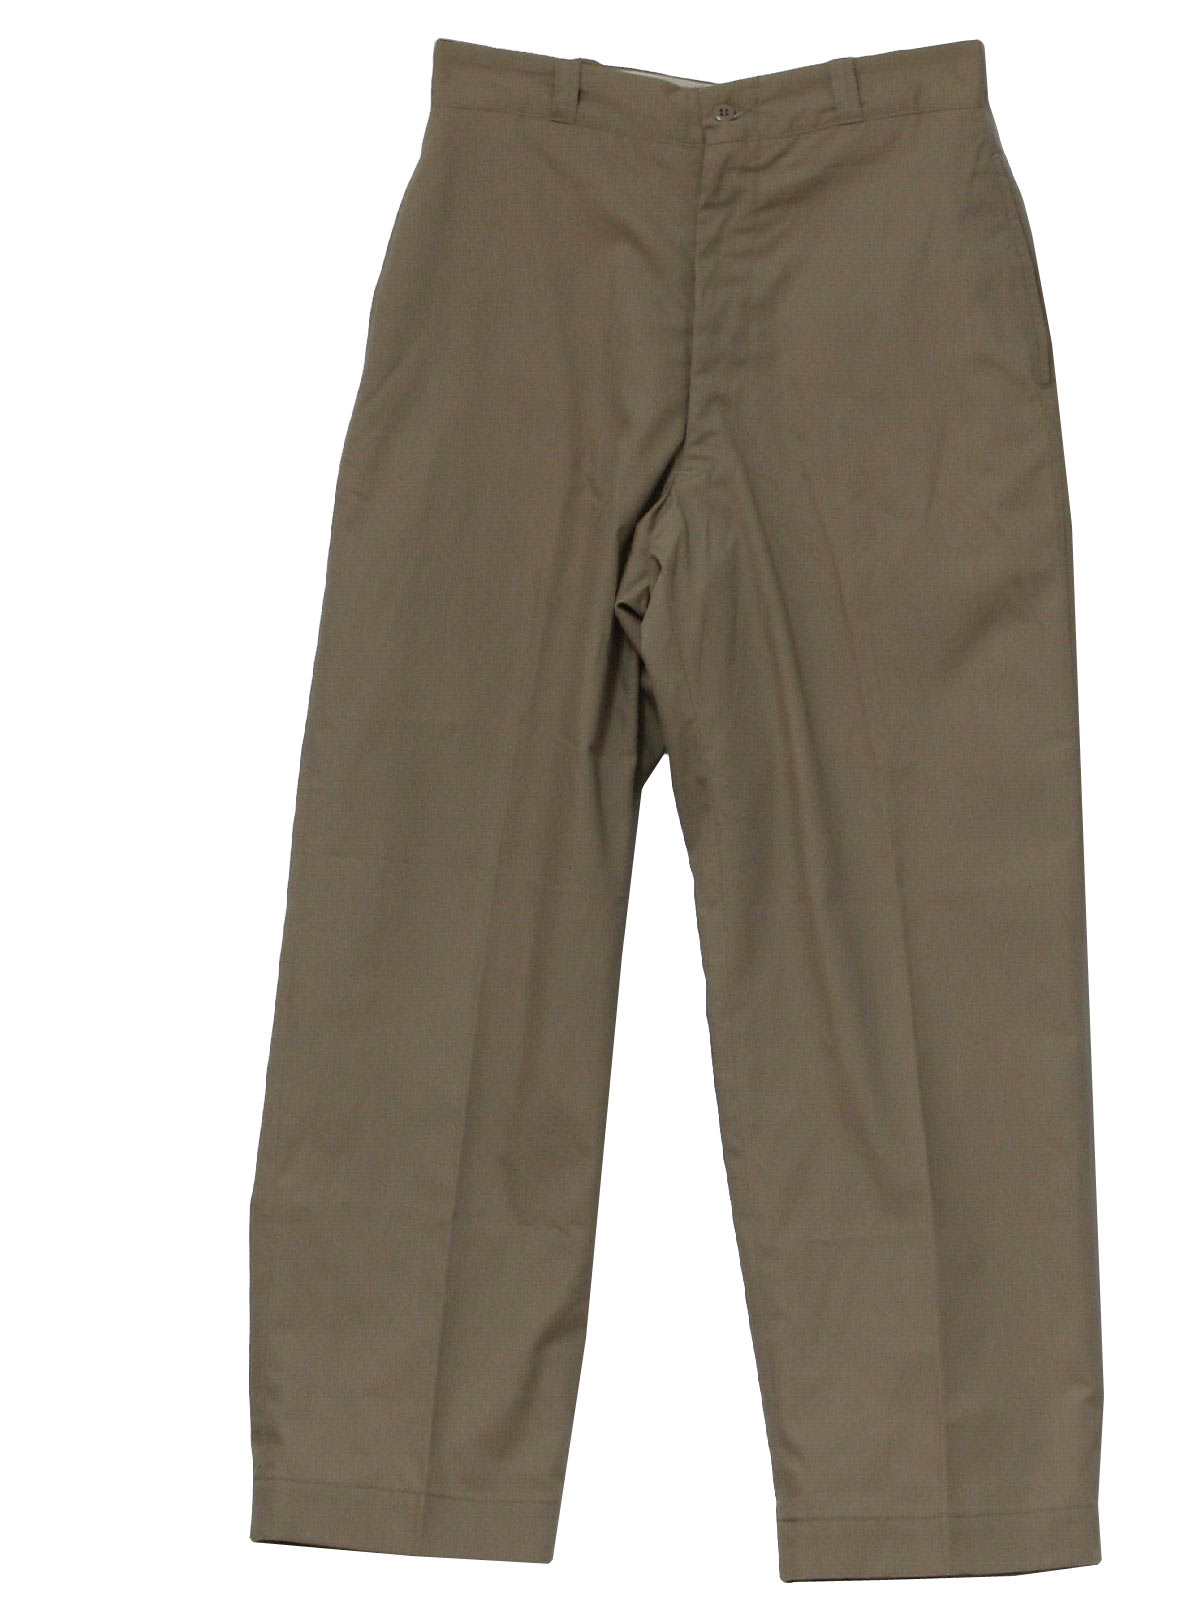 Vintage 1950's Pants: Late 50s -No Label- Mens khaki tan cotton twill ...